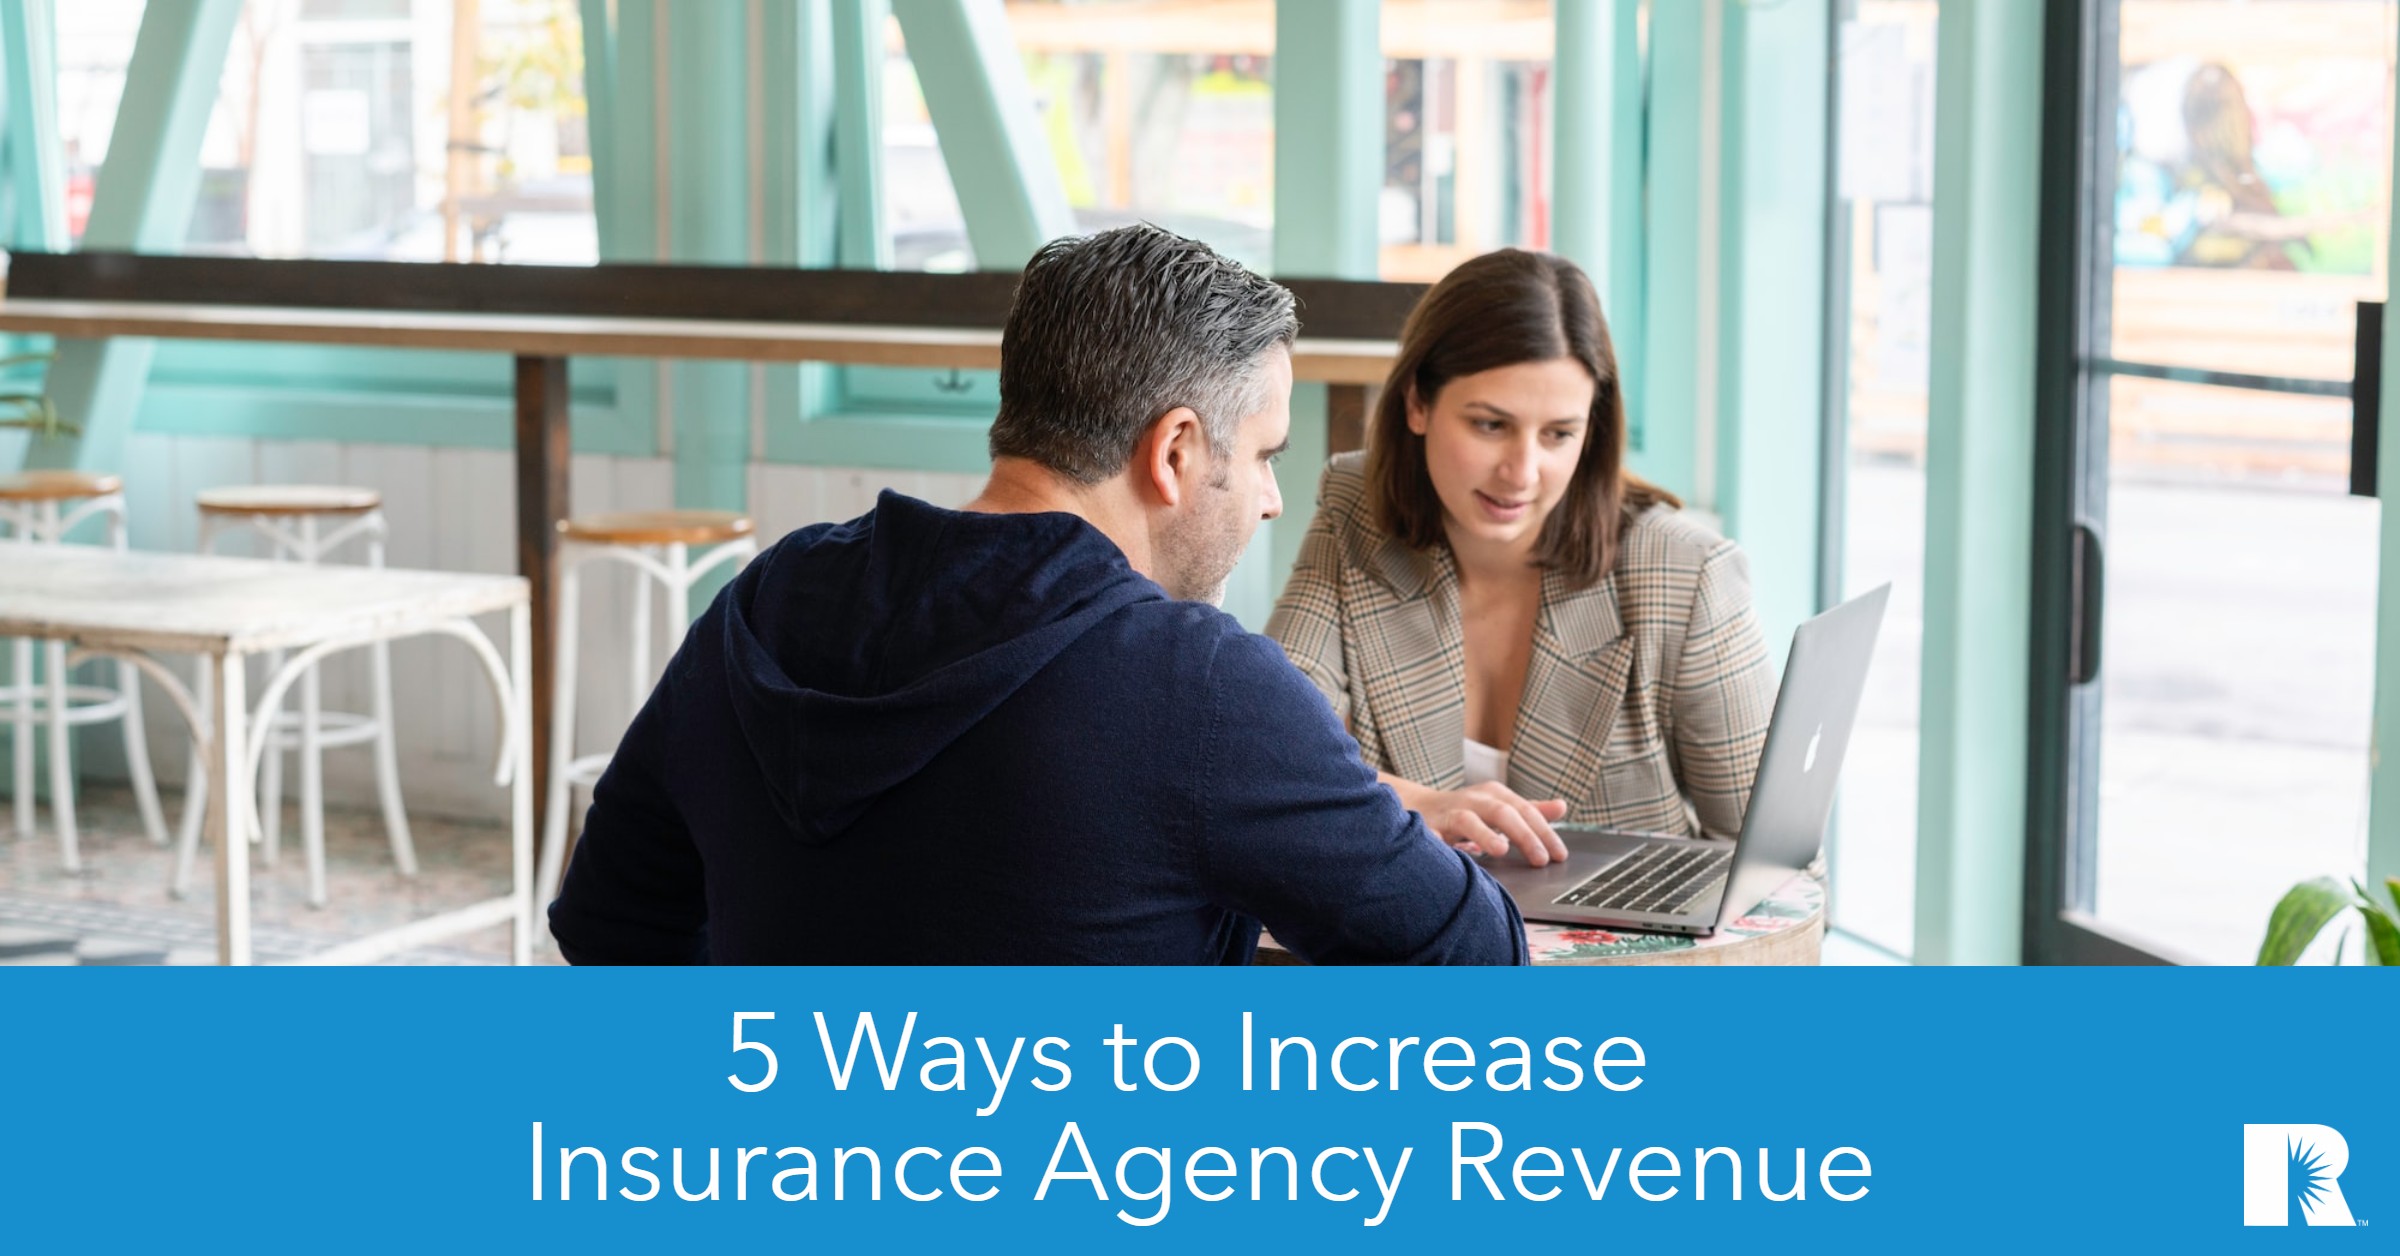 Increase insurance agency revenue image